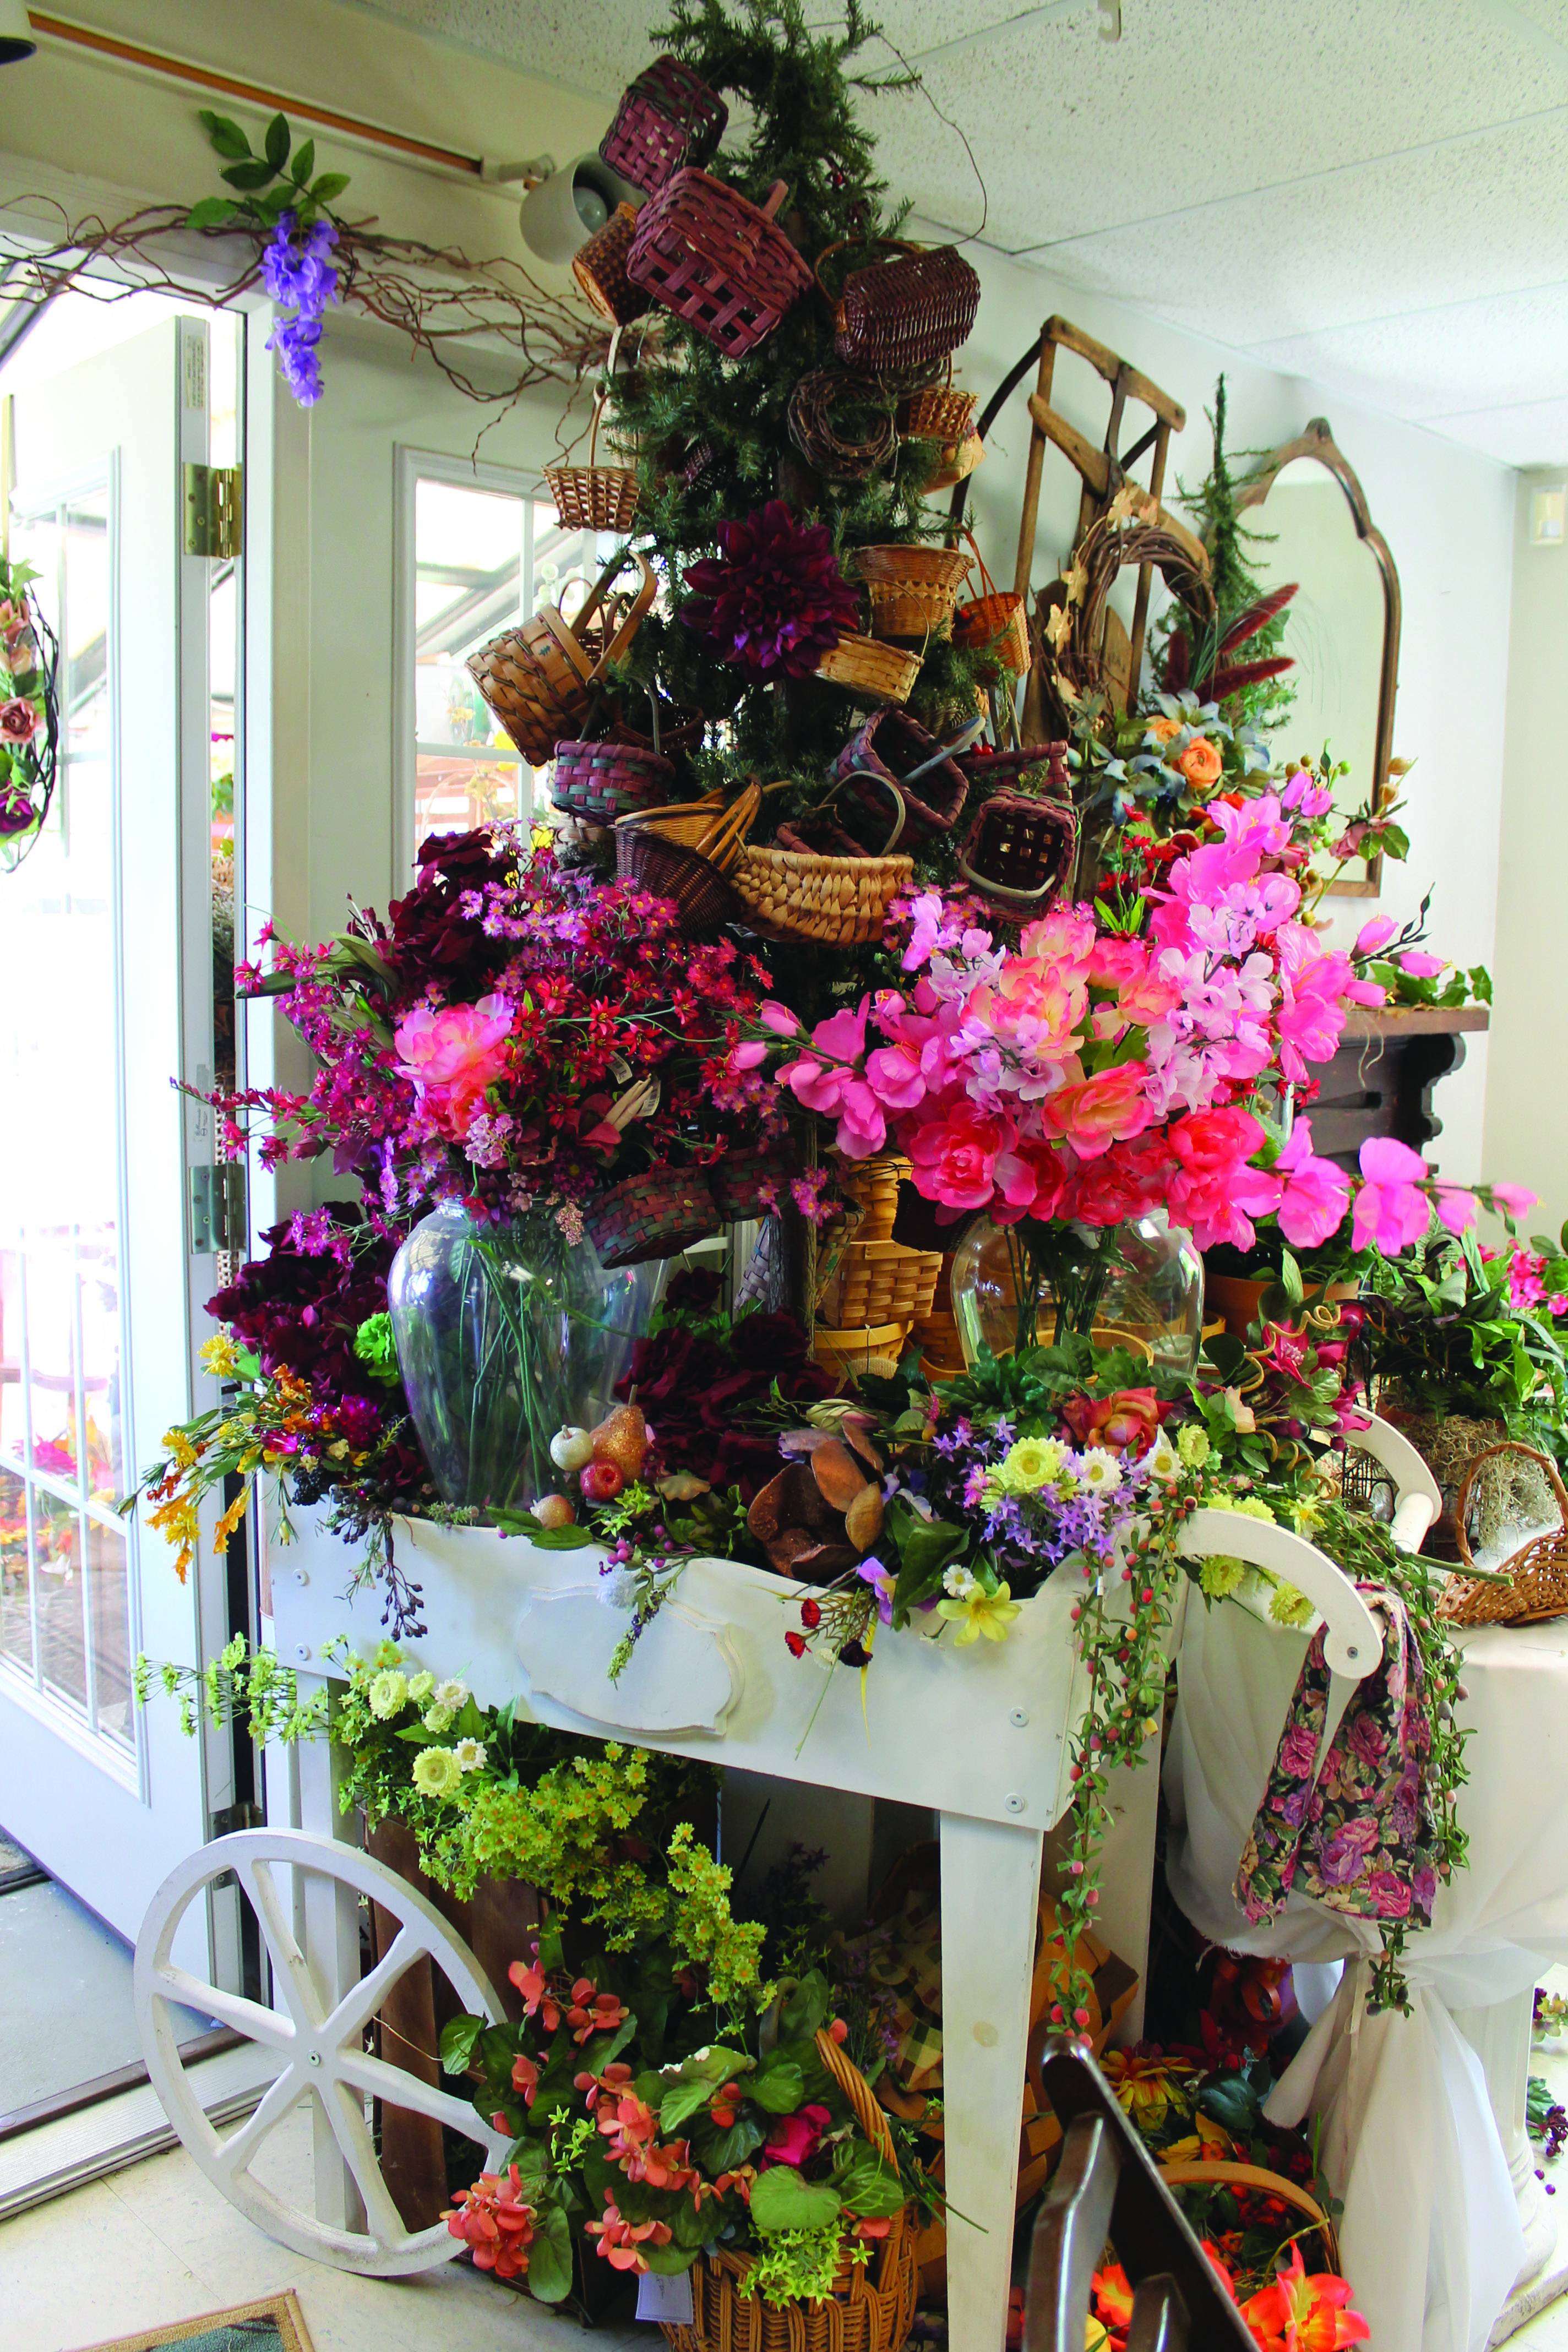 An elaborate display at John's Four Seasons Florist.